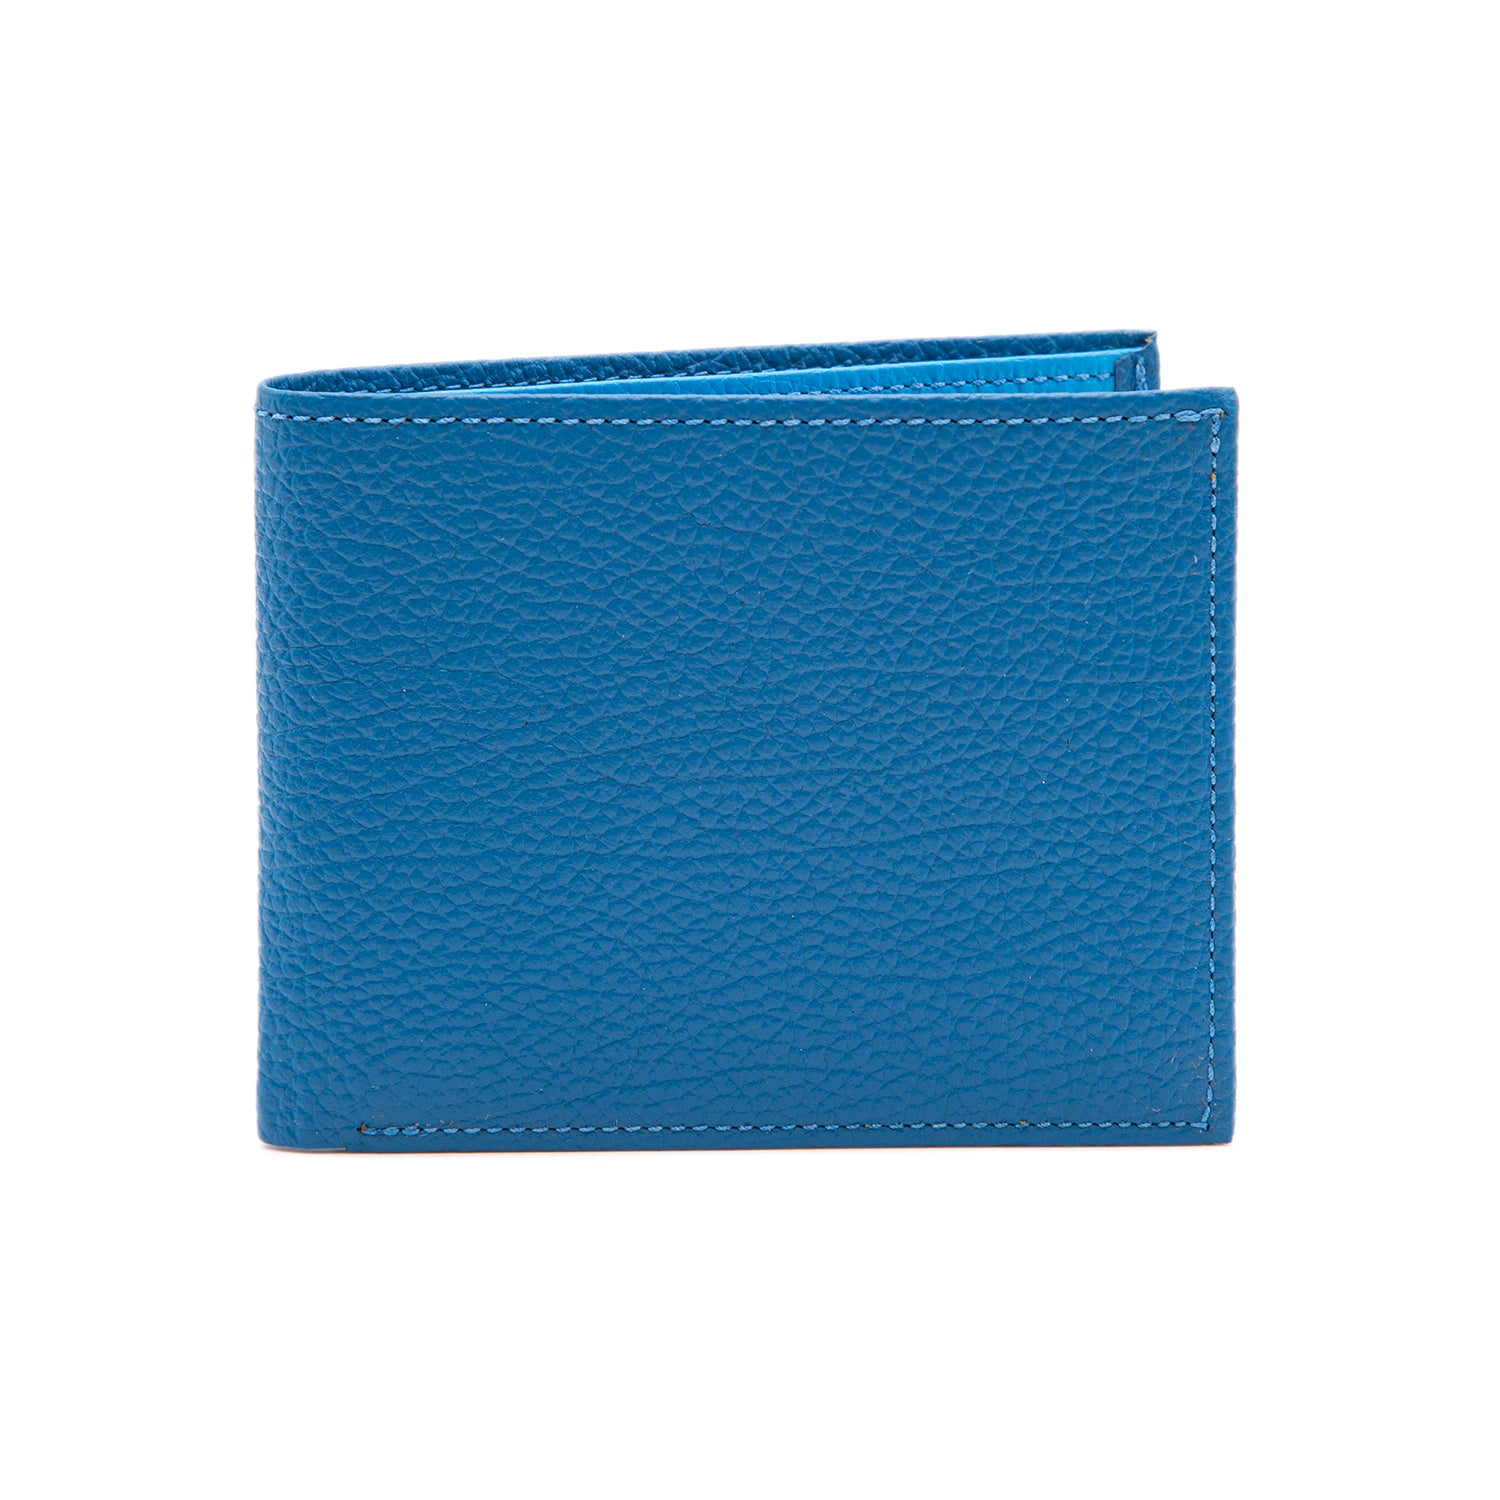 Mezlan Men's Wallets Blue European Calfskin LG01 (MZA1001